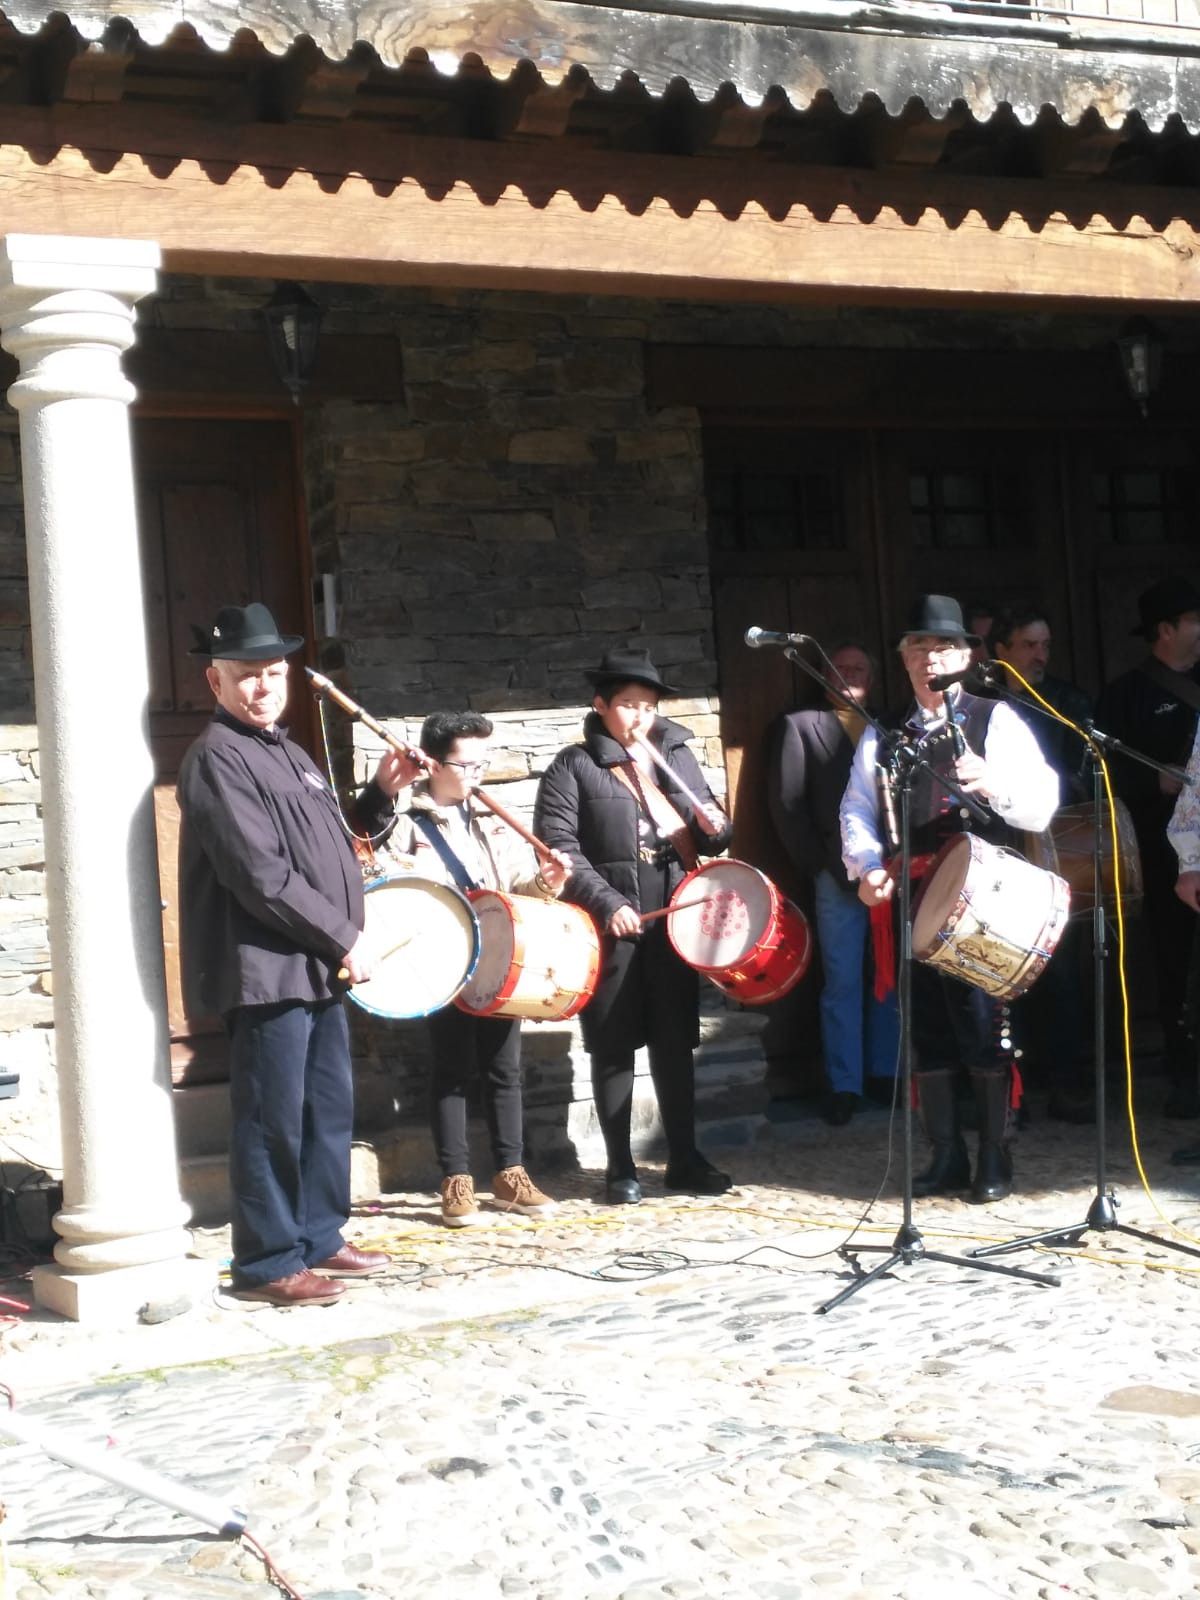  Festival de tamborileros en valero (8) 